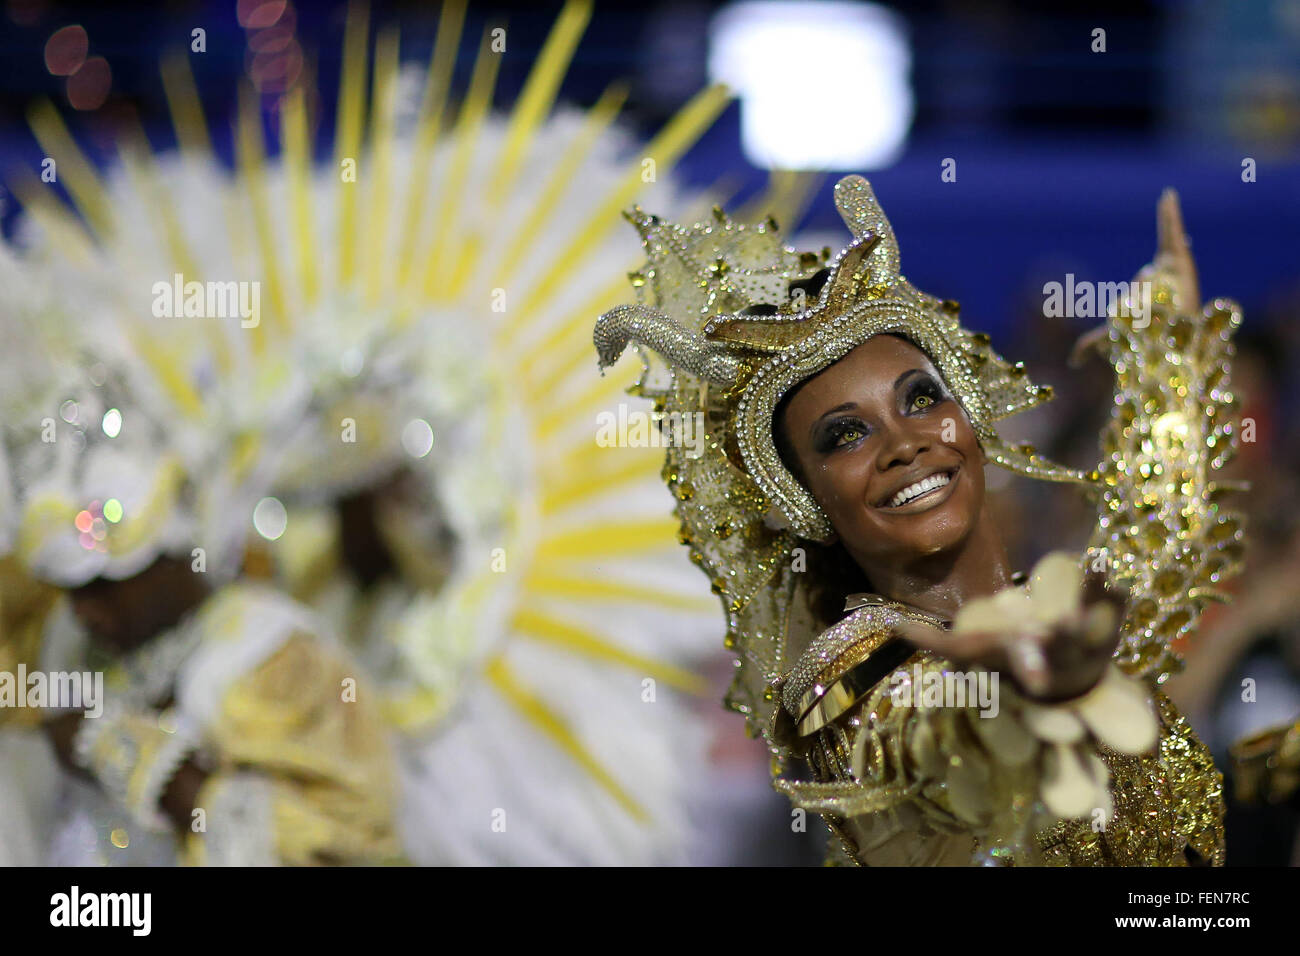 Rio De Janeiro, Brazil. 7th Feb, 2016. A dancers takes part in a parade during the Rio de Janeiro Carnival, at the Marques de Sapucai Sambadrome in Rio de Janeiro, Brazil, on Feb. 7, 2016. Credit:  Marcos Arcoverde/AGENCIA ESTADO/Xinhua/Alamy Live News Stock Photo